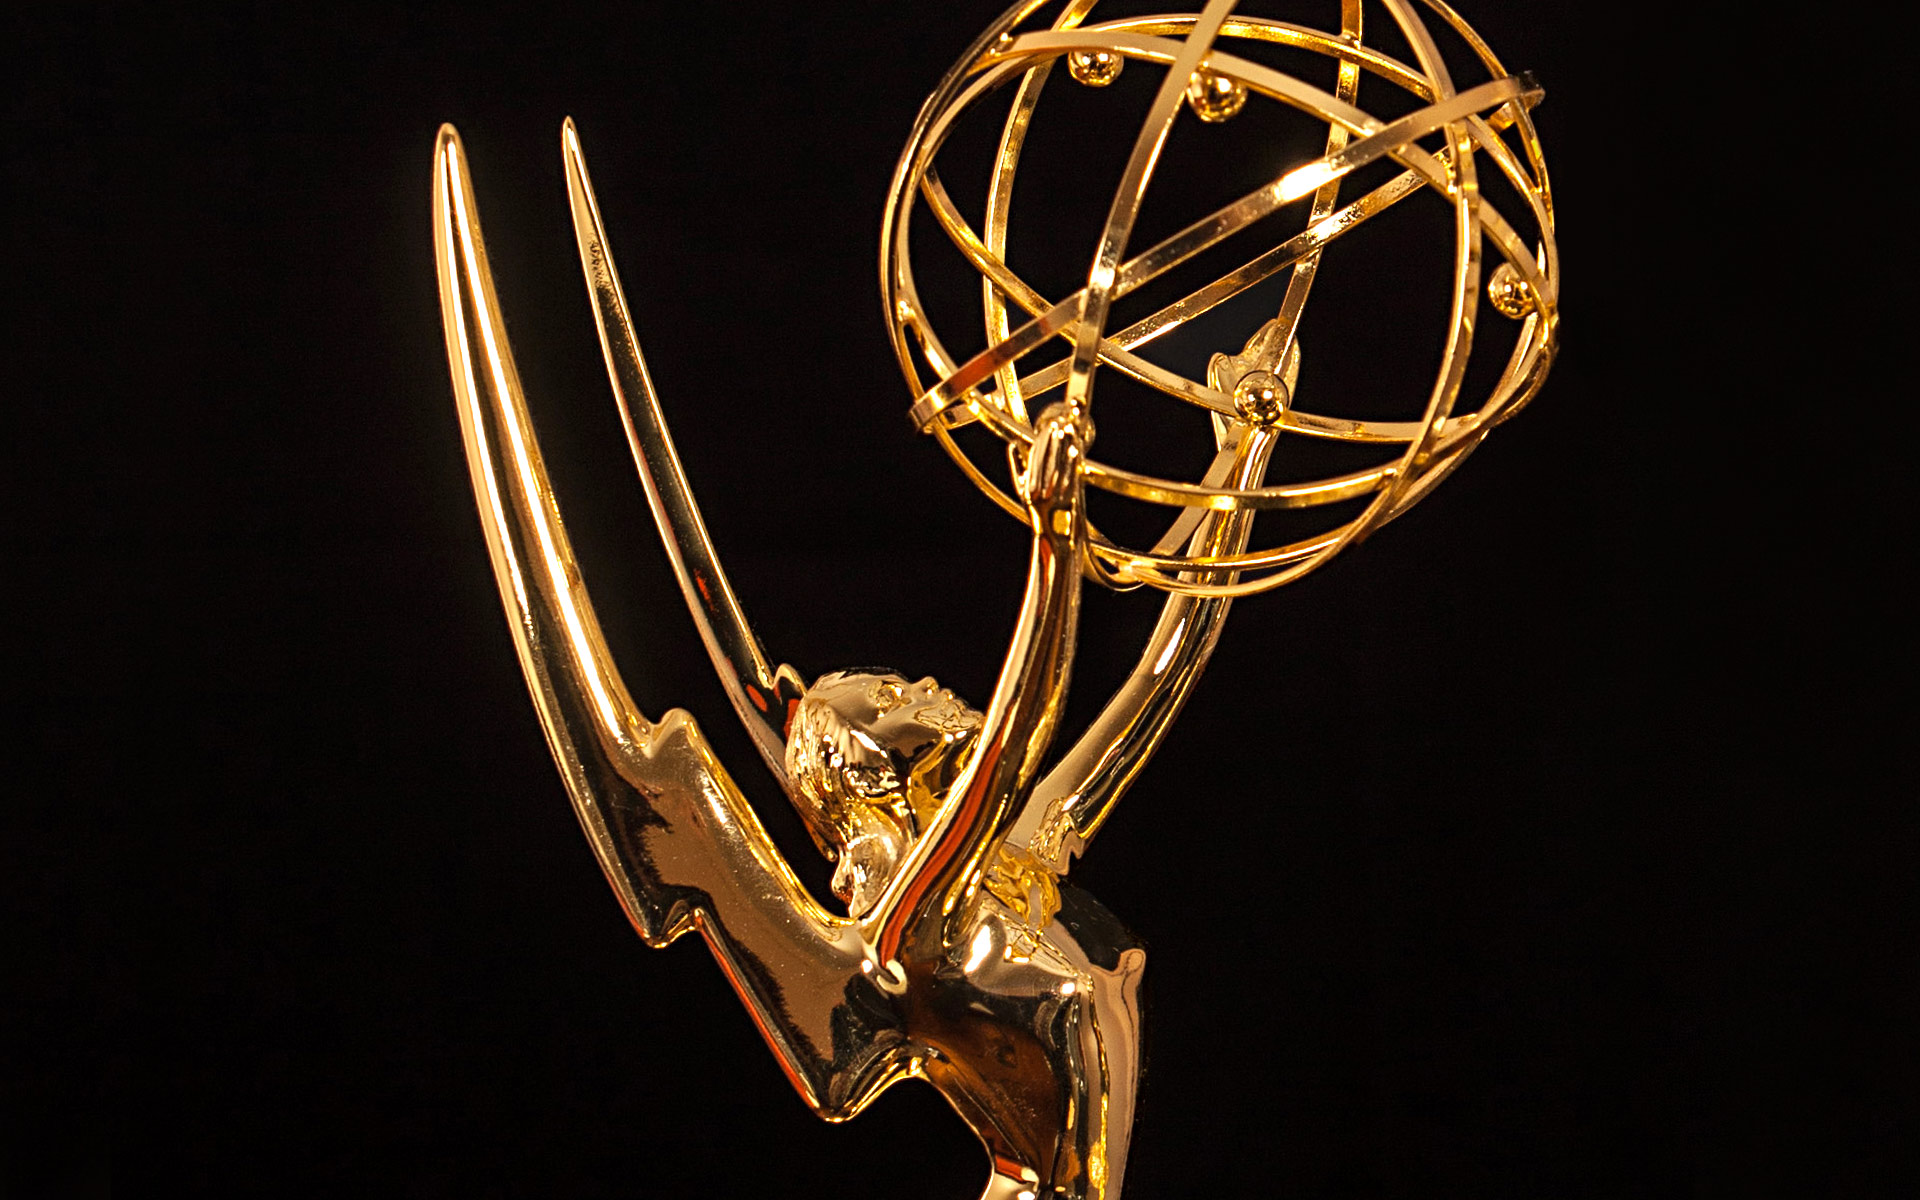 Emmy Award statue close-up